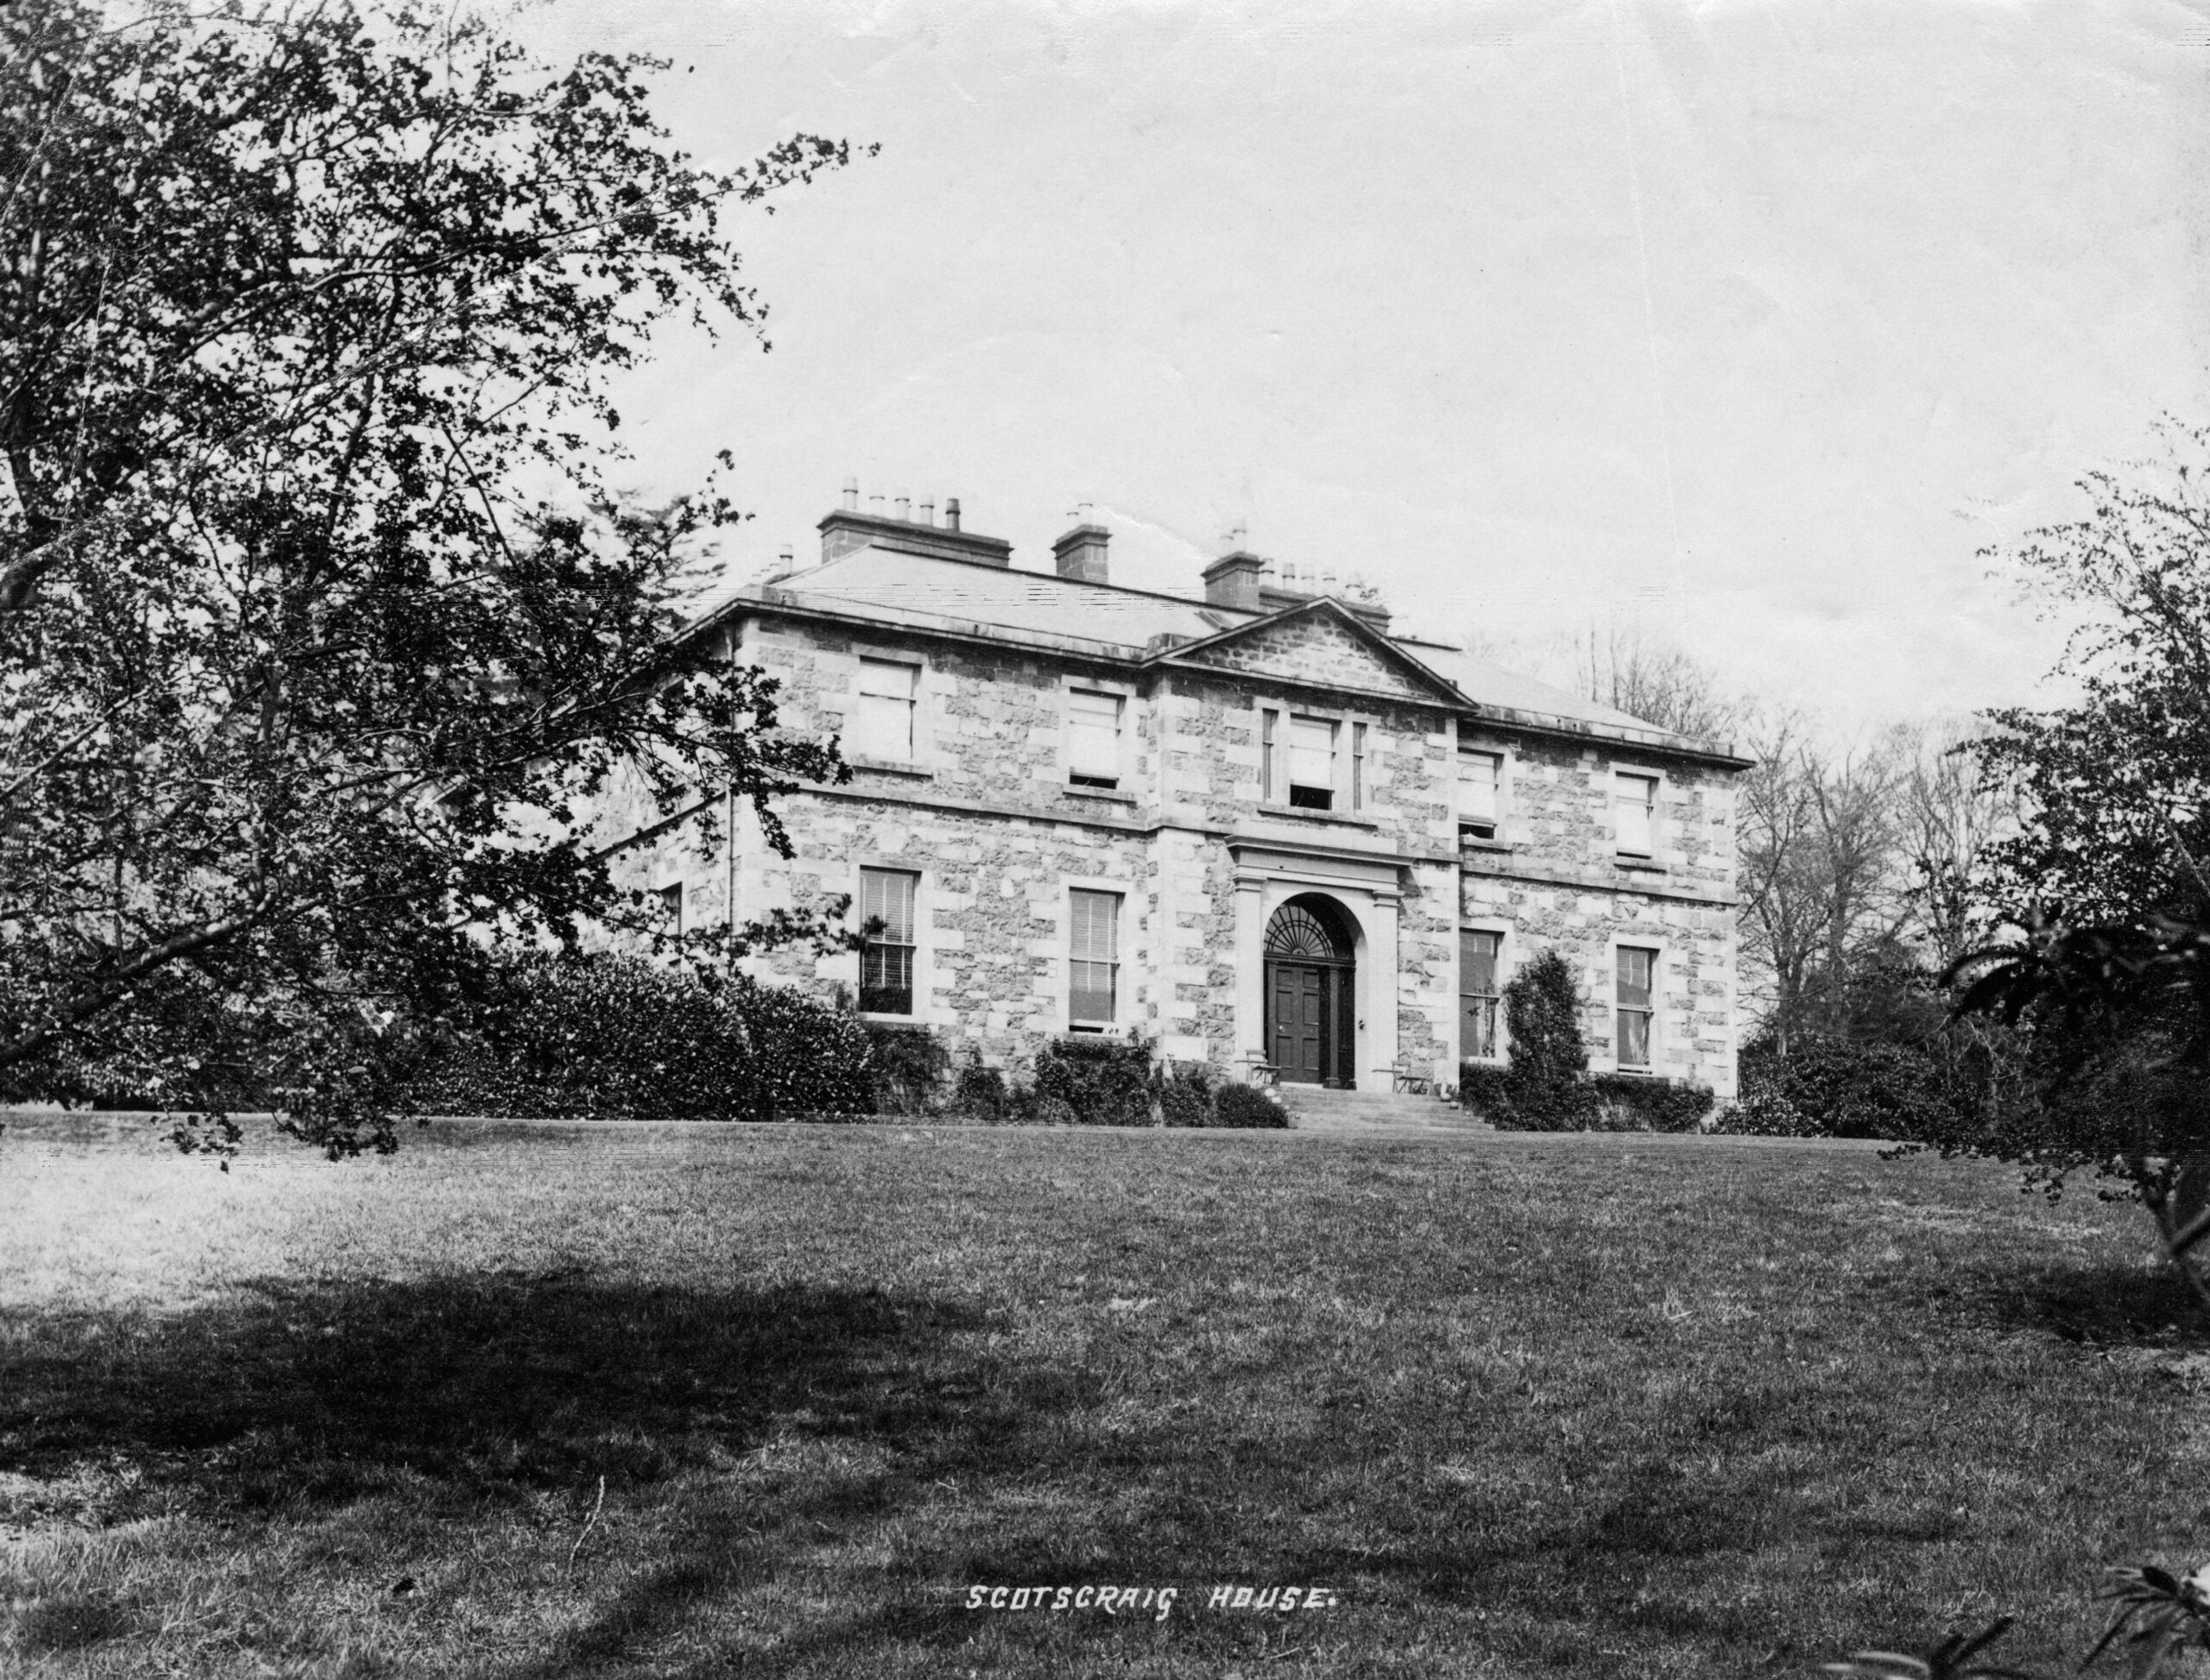 Tayport Heritage Trail - Board 12 - Former Scotscraig Mansion built circa 1807 by William Dalgleish and demolished in 1985